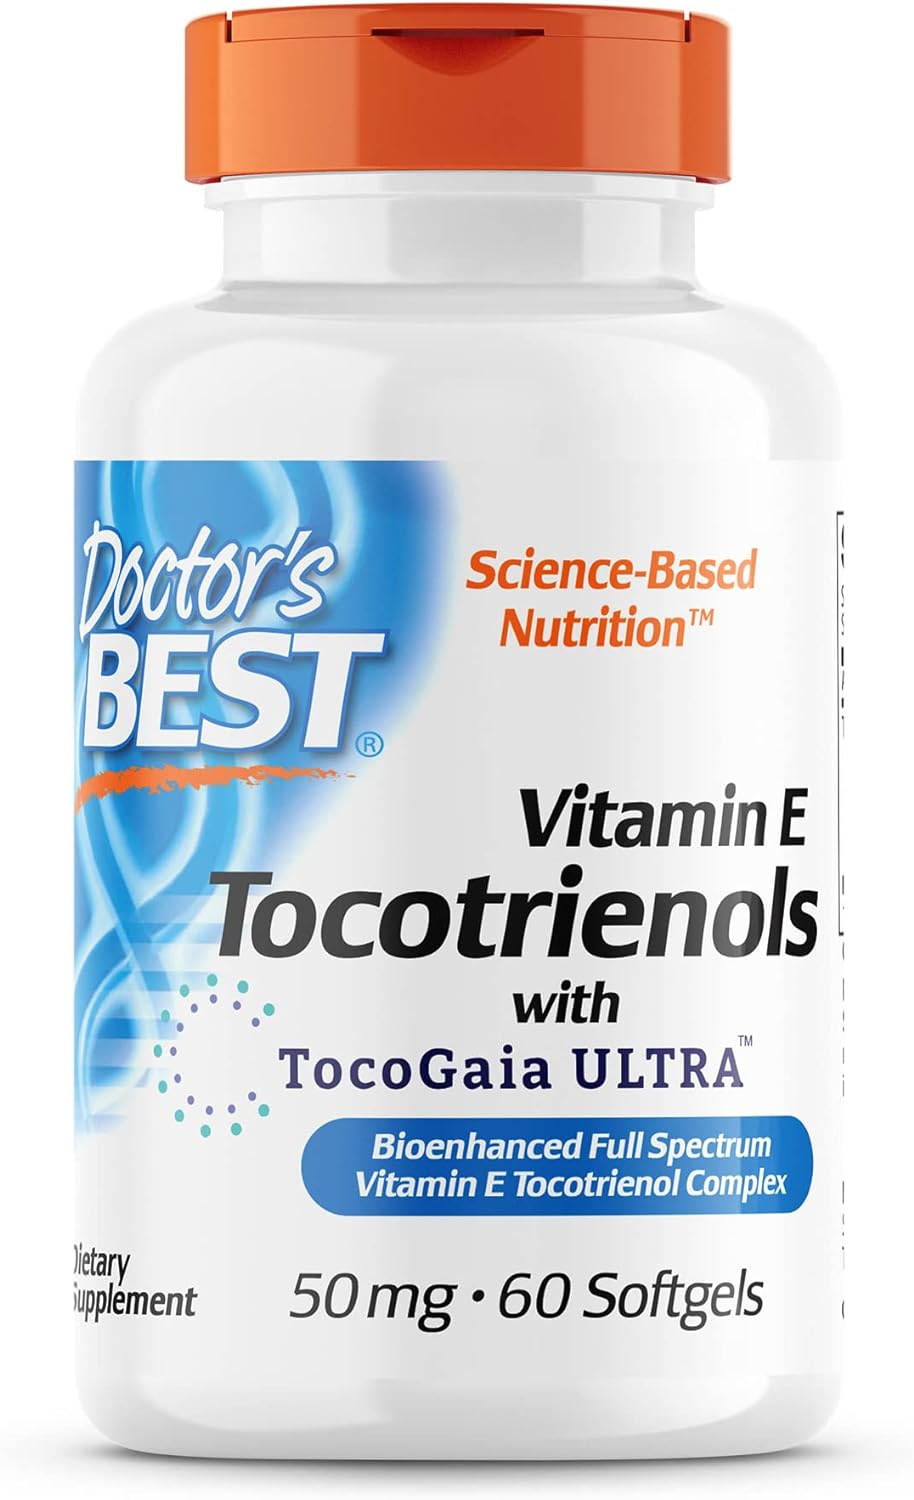 Doctor's Best Tocotrienols contains EVNol SupraBio Full